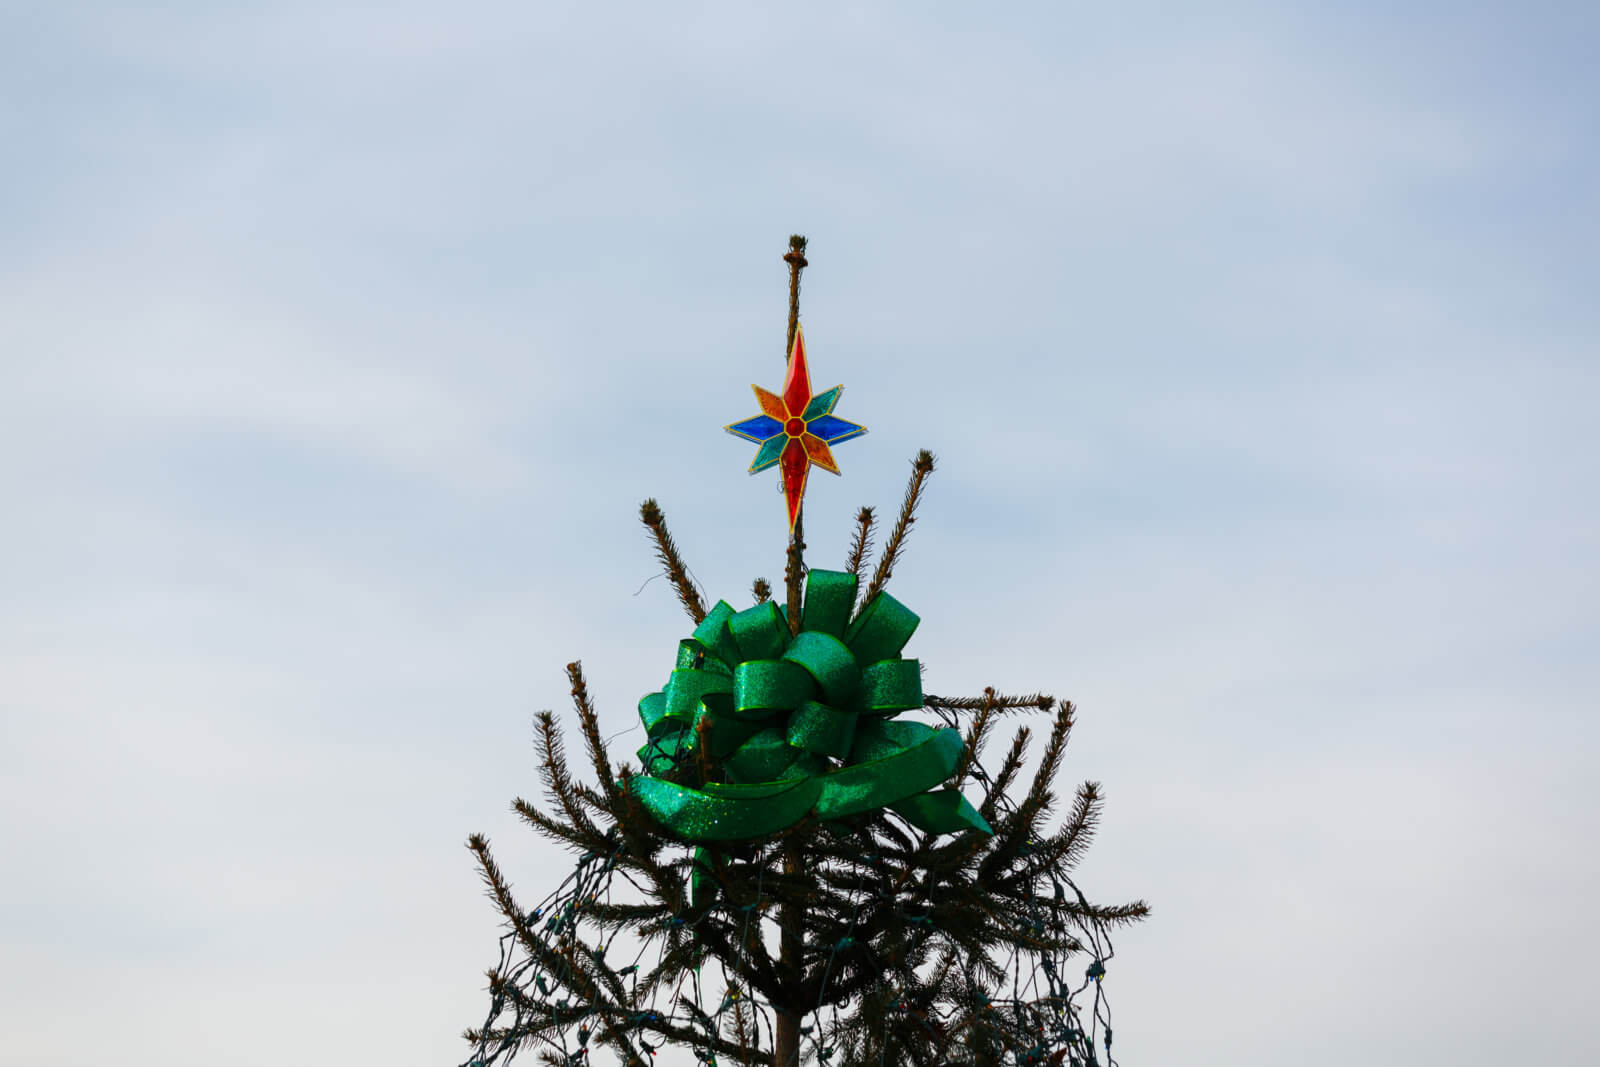 PHOTOS Community celebrates Astoria Park holiday festival and tree